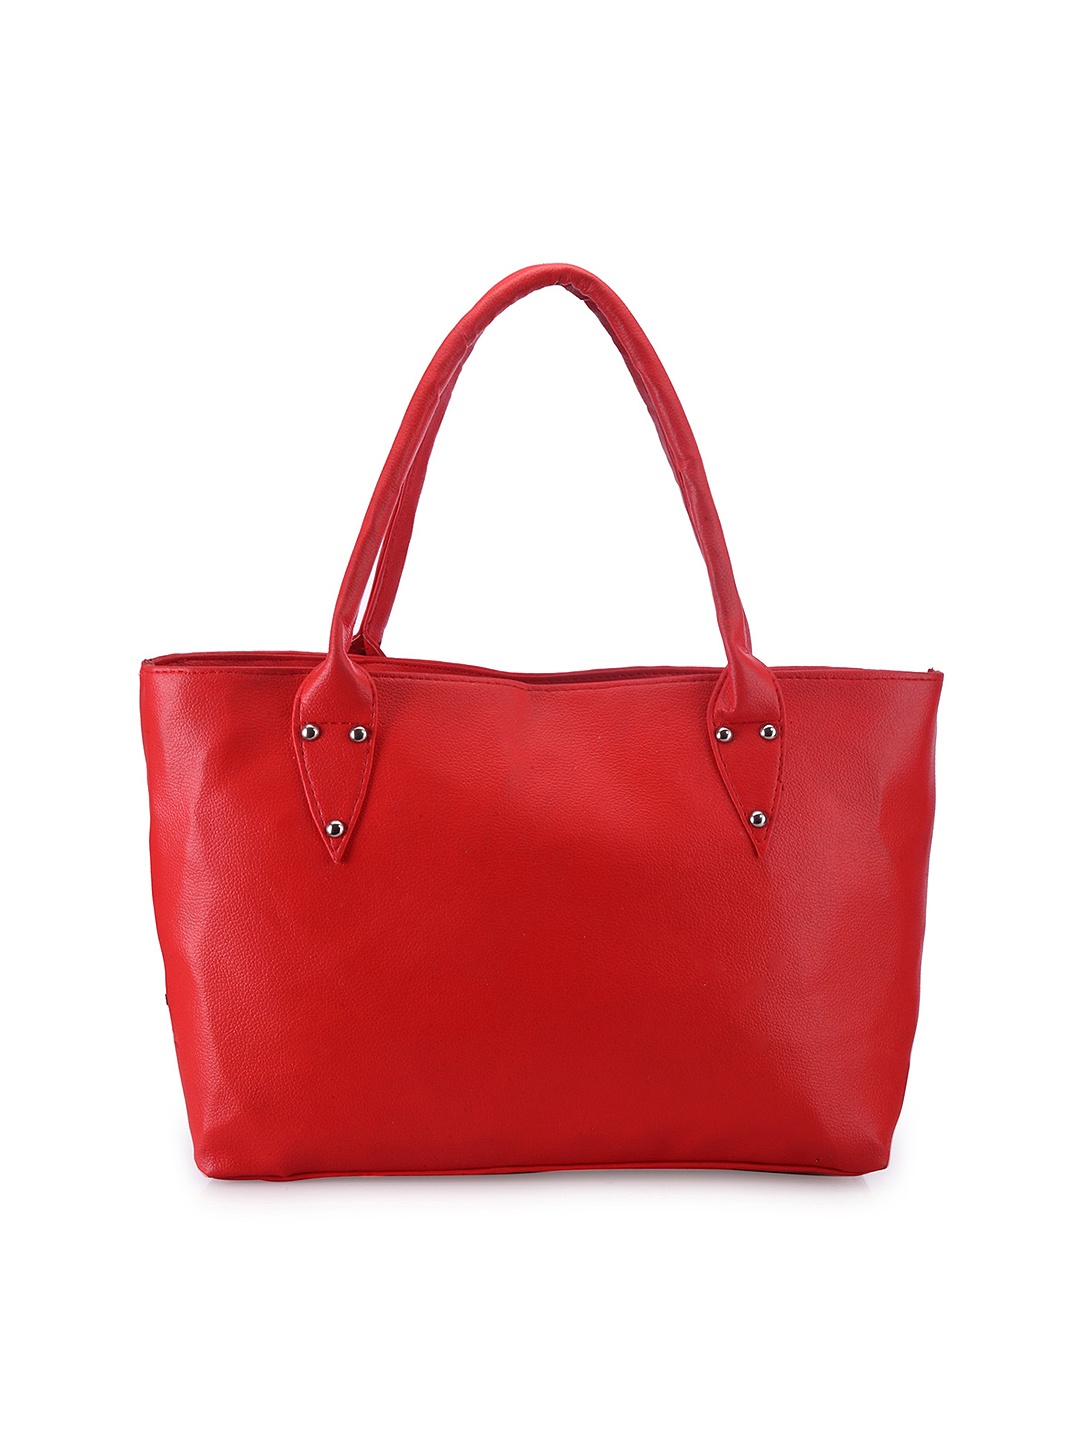 Myntra Nell Red Shoulder Bag 724191 | Buy Myntra Nell Handbags at best price online. All myntra ...